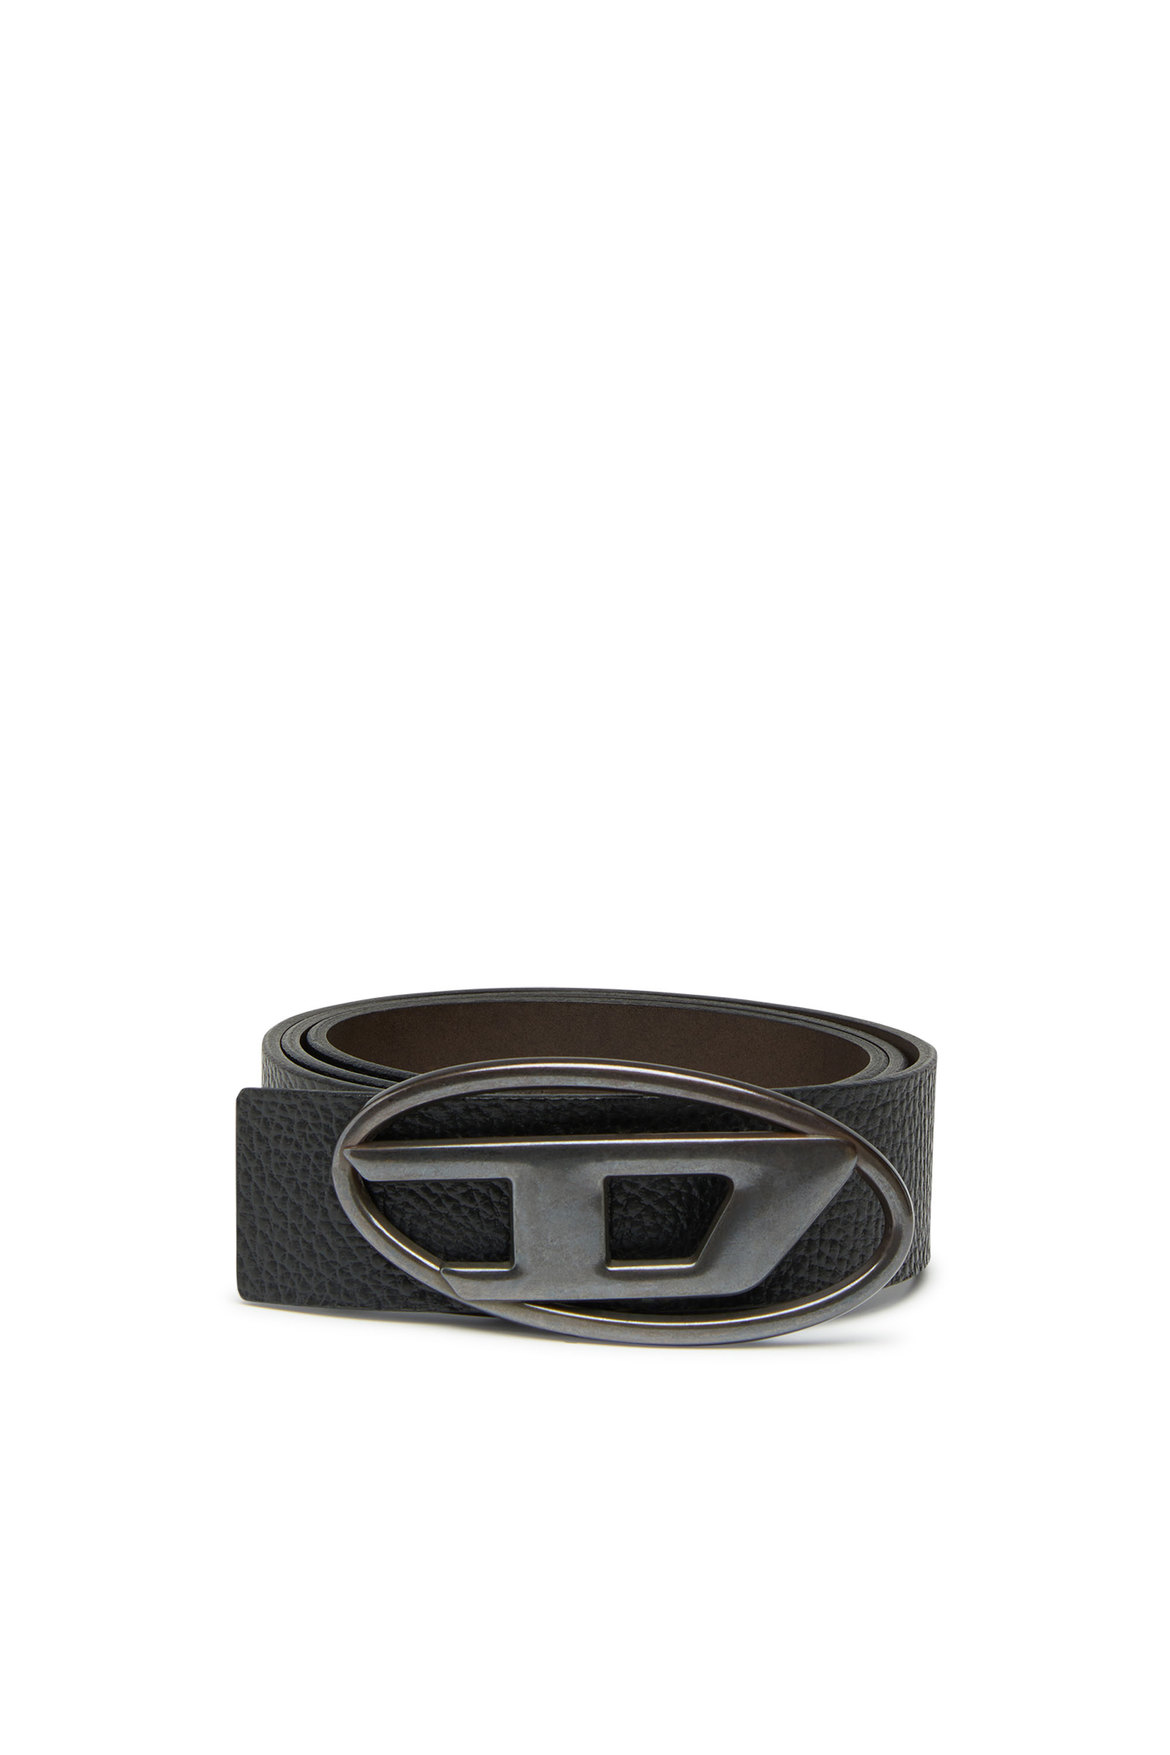 Reversible belt with D oval buckle | Diesel